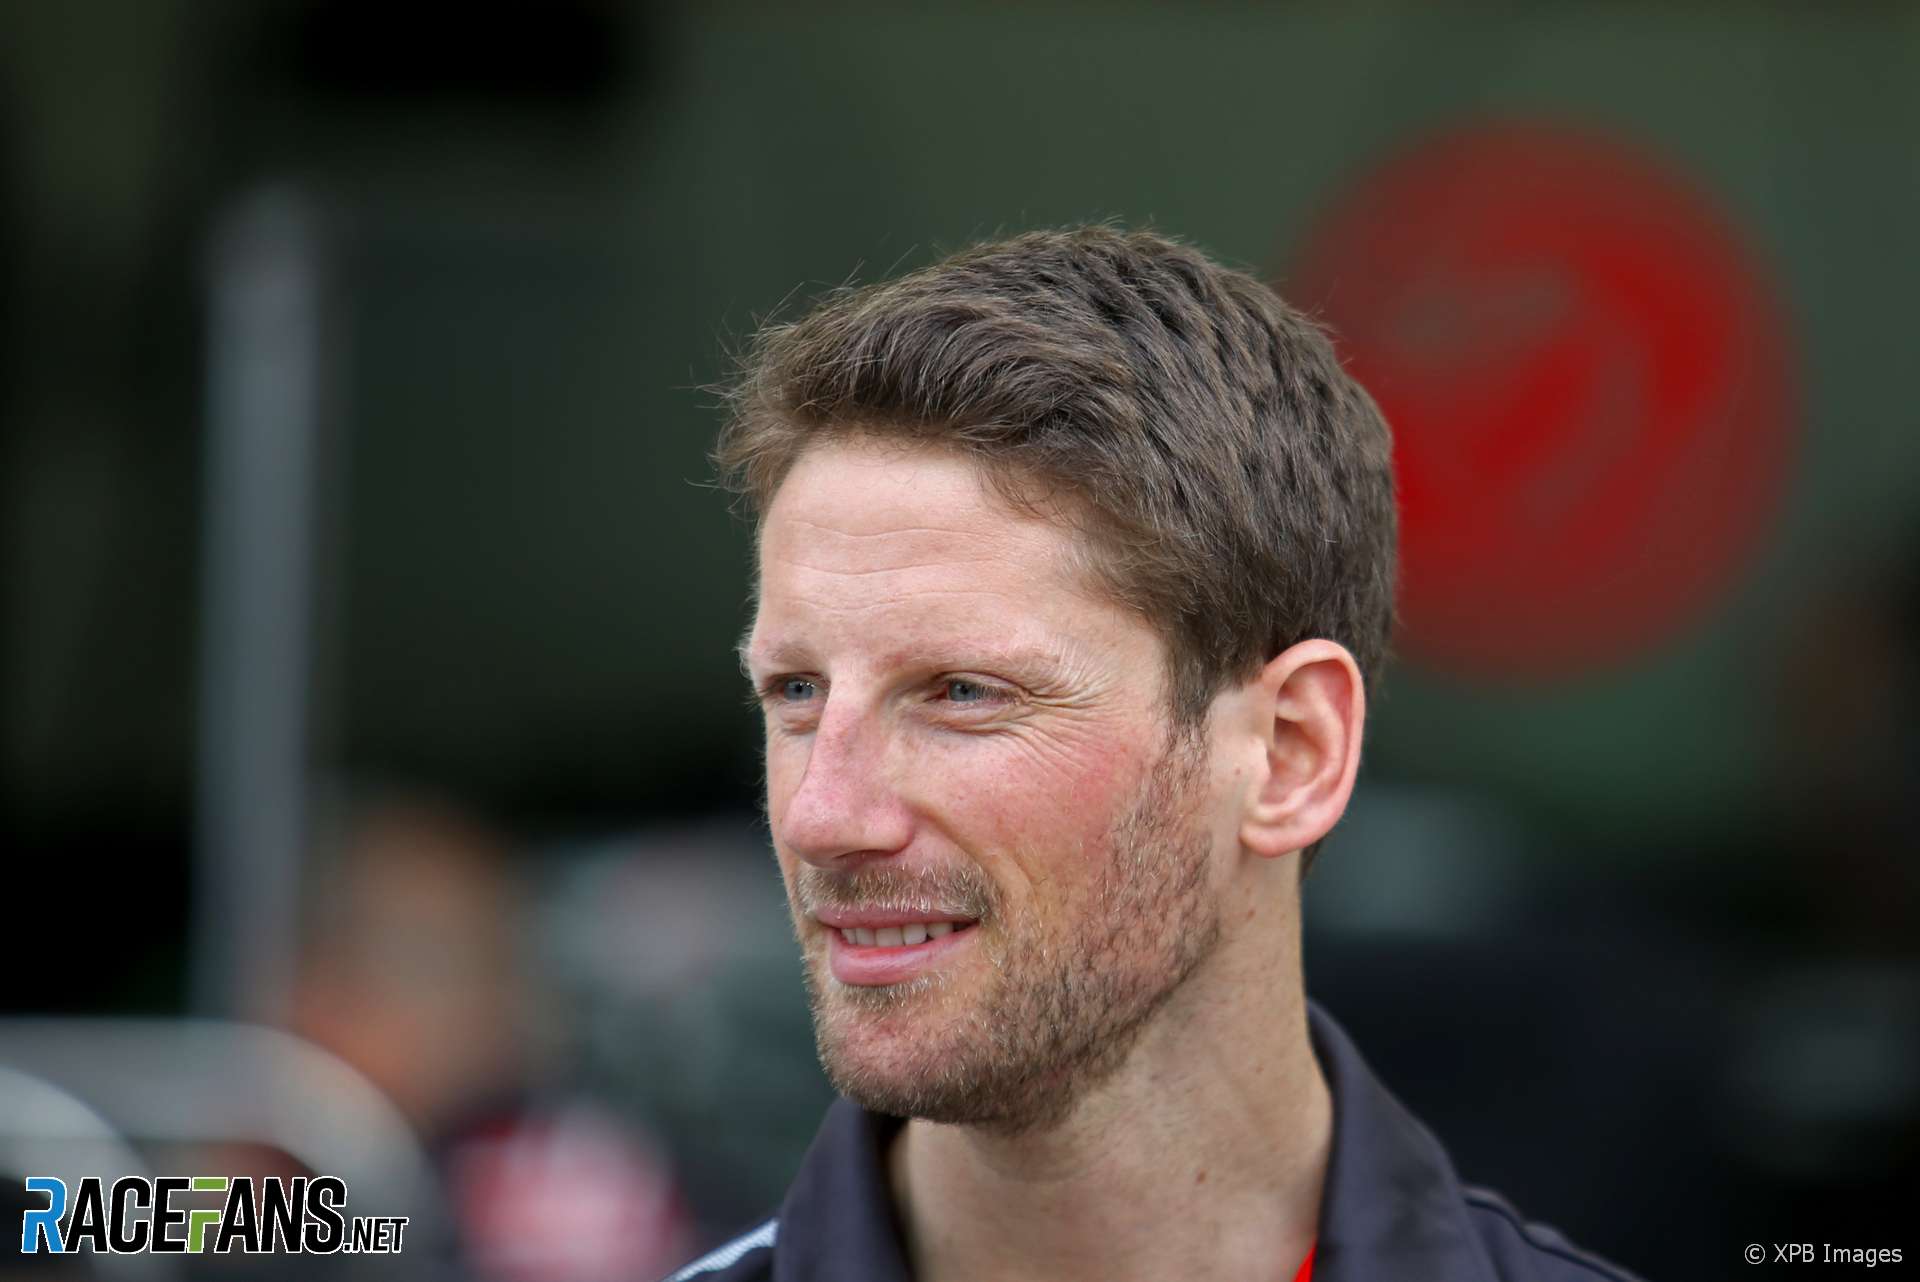 Romain Grosjean, Haas, Bahrain International Circuit, 2018